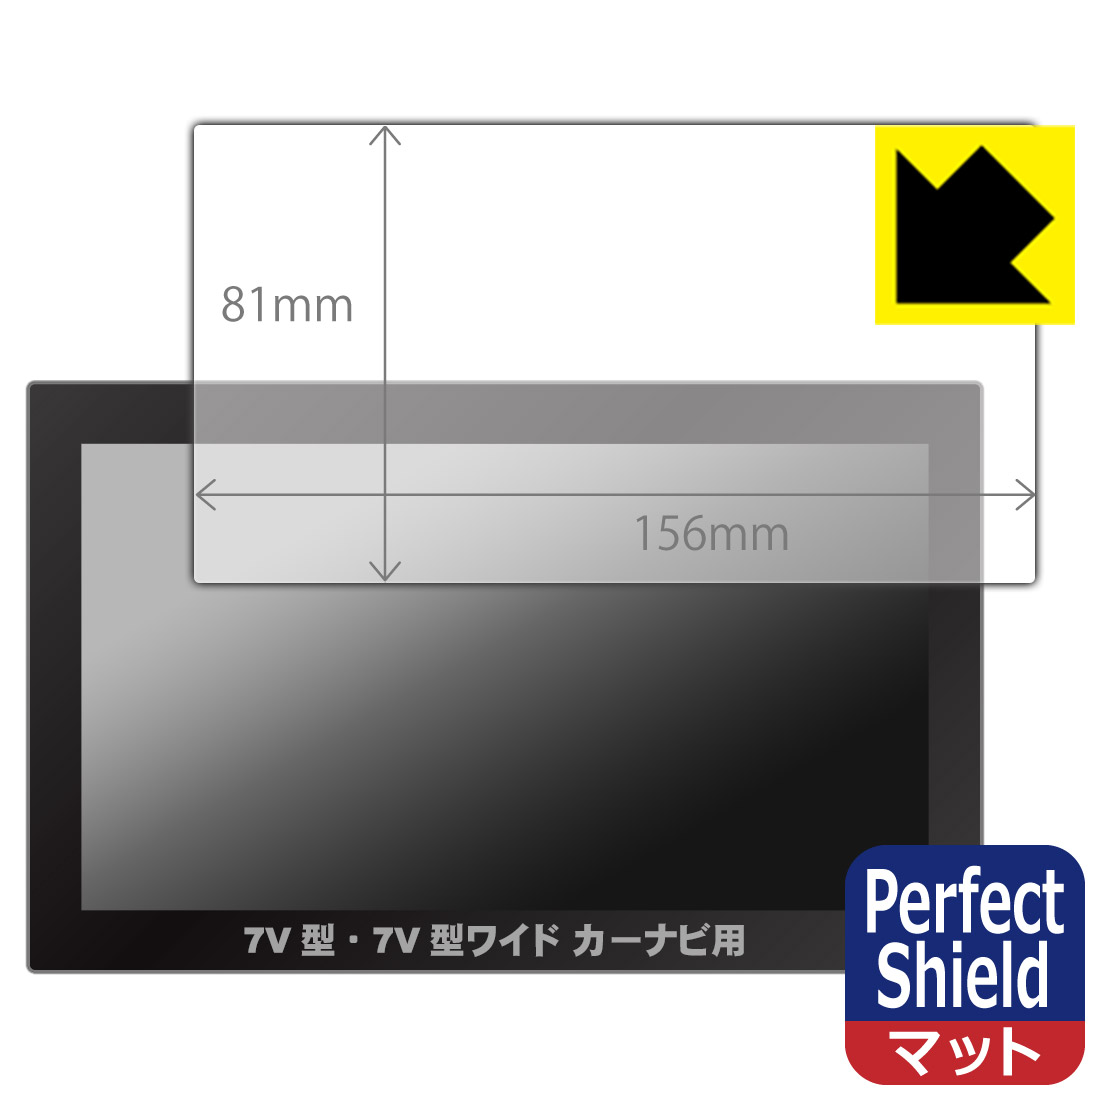 Perfect Shield J[irp y7V^E7V^Chpz(tBTCY 156mm~81mm) 3Zbg { А